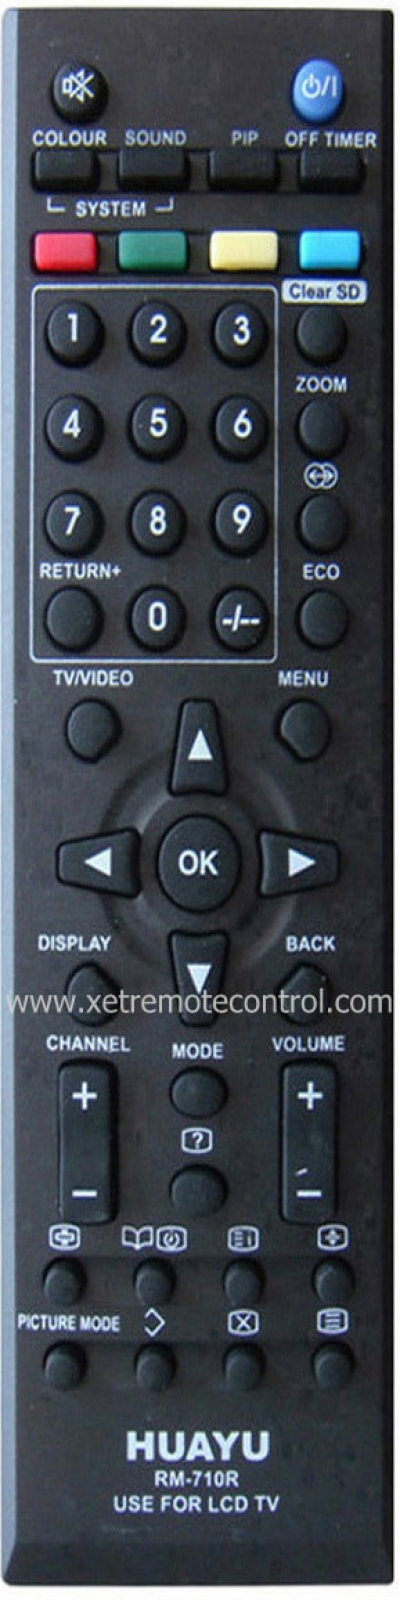 RM-C2020 JVC TV REMOTE CONTROL